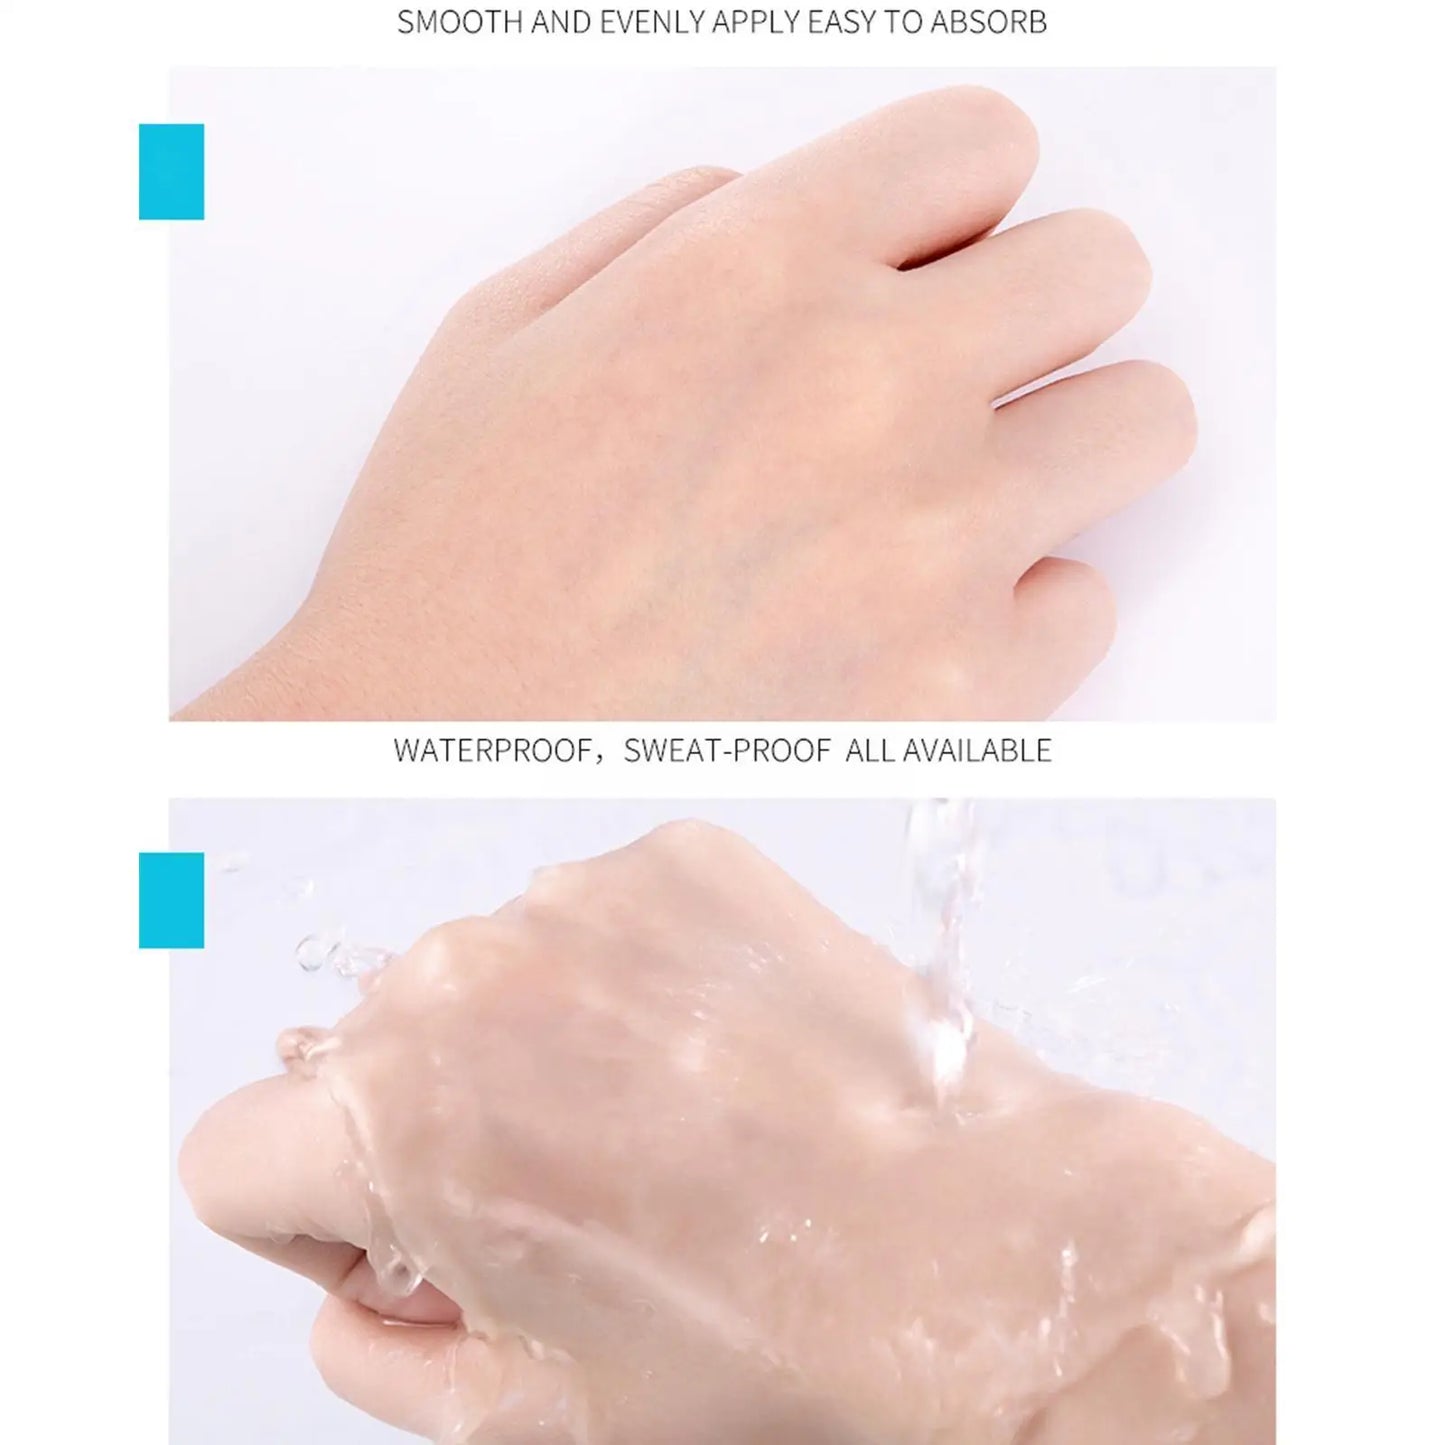 Sunscreen Cream Stick SPF 50+ UV Protective Anti Oxidant Sun Block Isolation Cream Lightweight Korea For All Skin Type Cosmetics